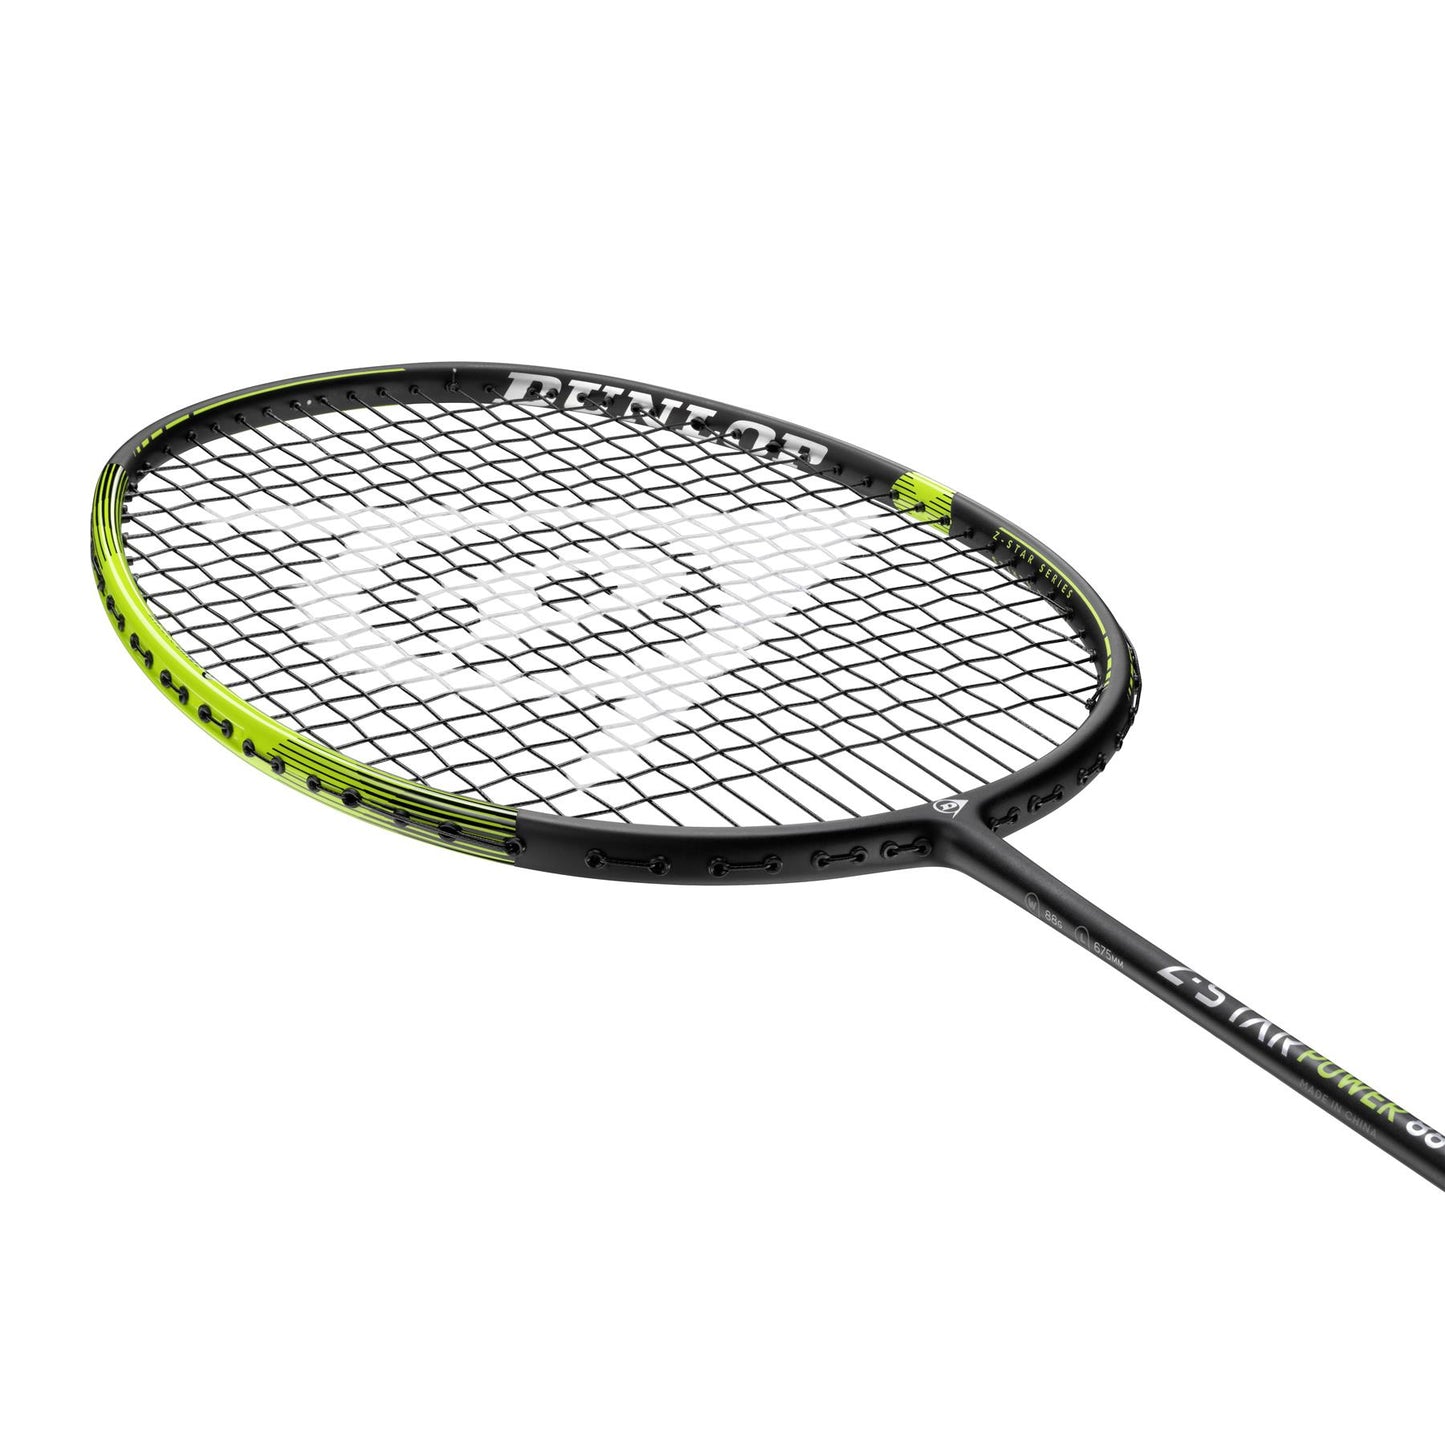 Dunlop Z-Star Power 88 Badminton Racket - Black / Green